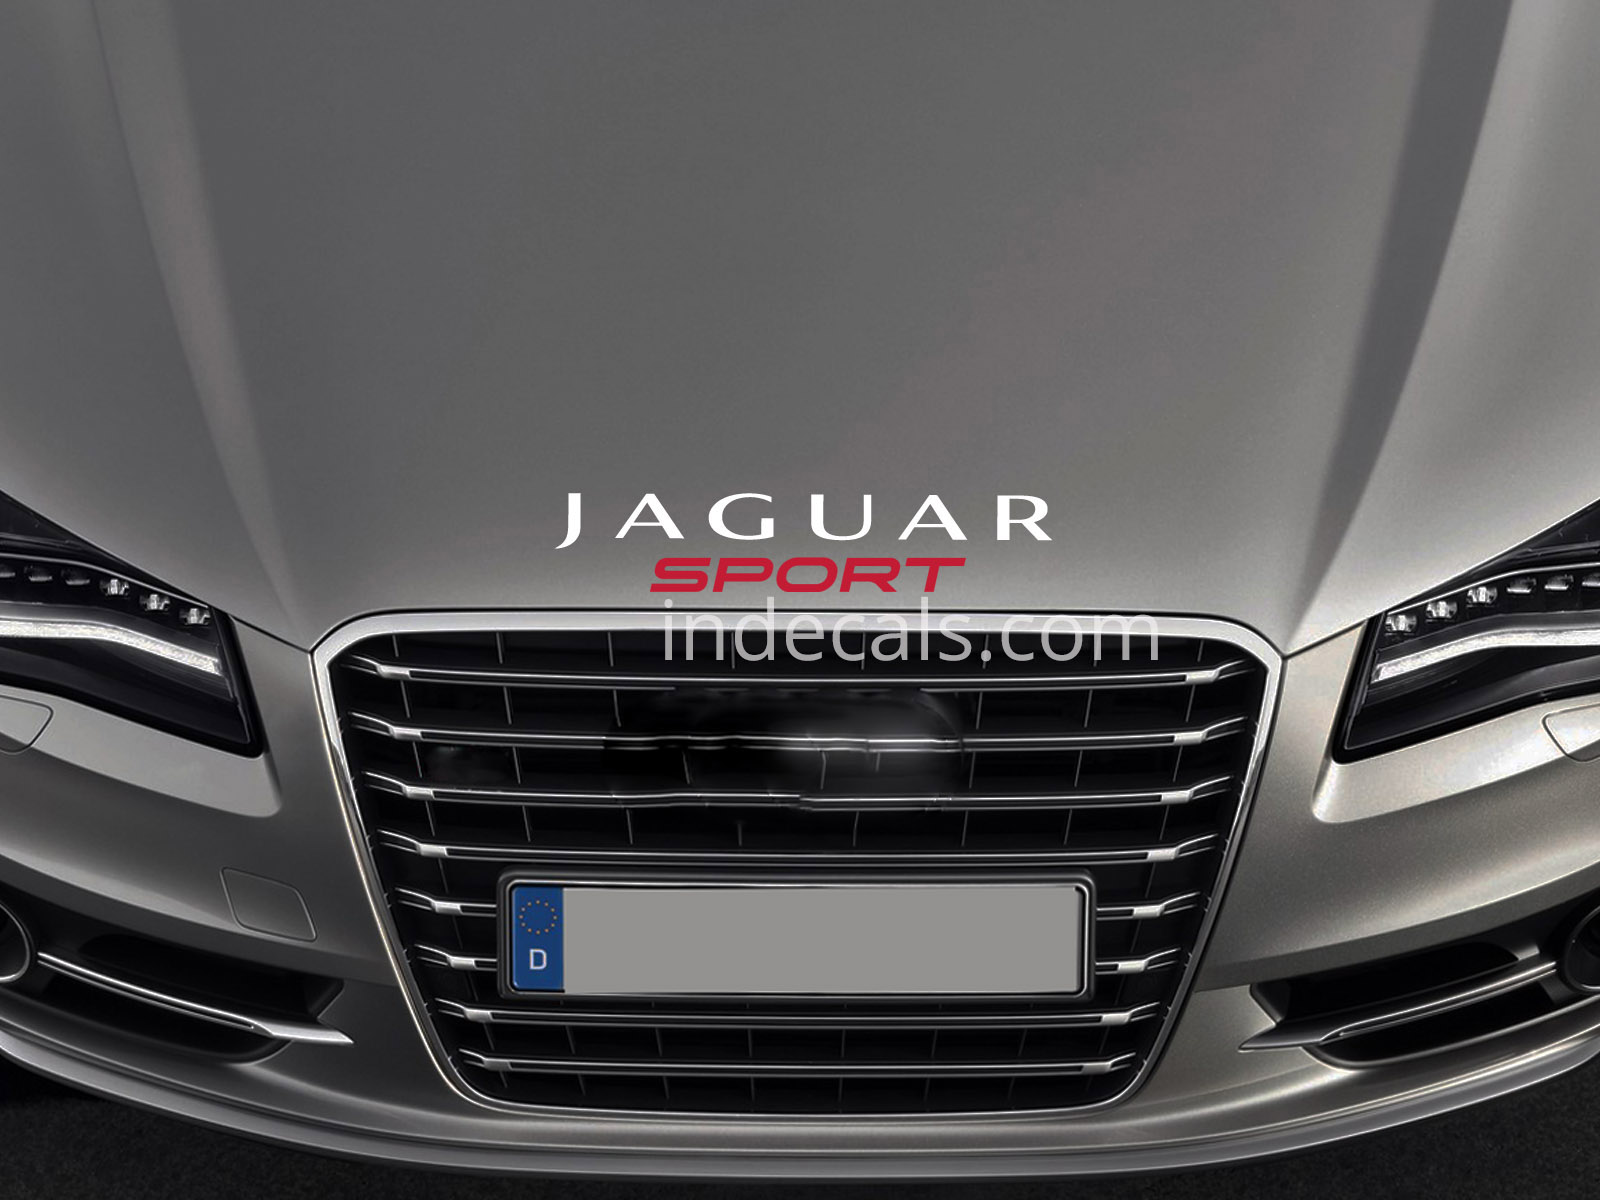 1 x Jaguar Sport Sticker for Bonnet - Red